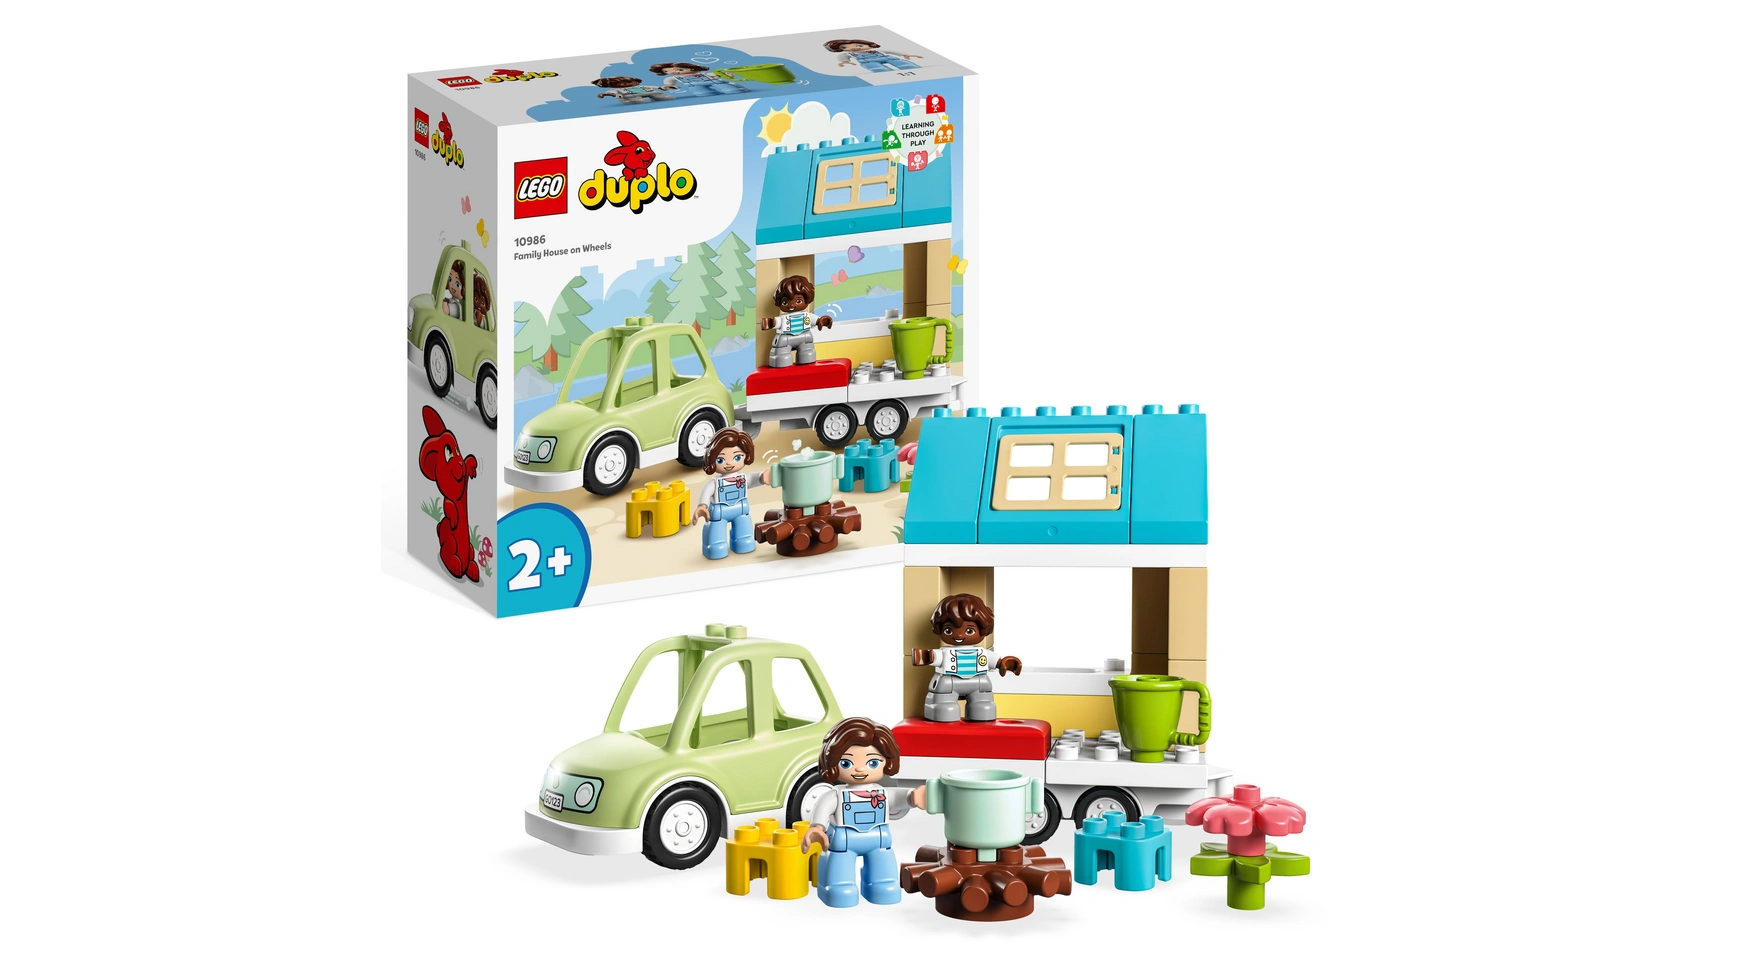 Lego DUPLO Дом на колесах, игрушечная машина с большими кубиками lego duplo town обучающая игрушка грузовик abc с игрушечным грузовиком